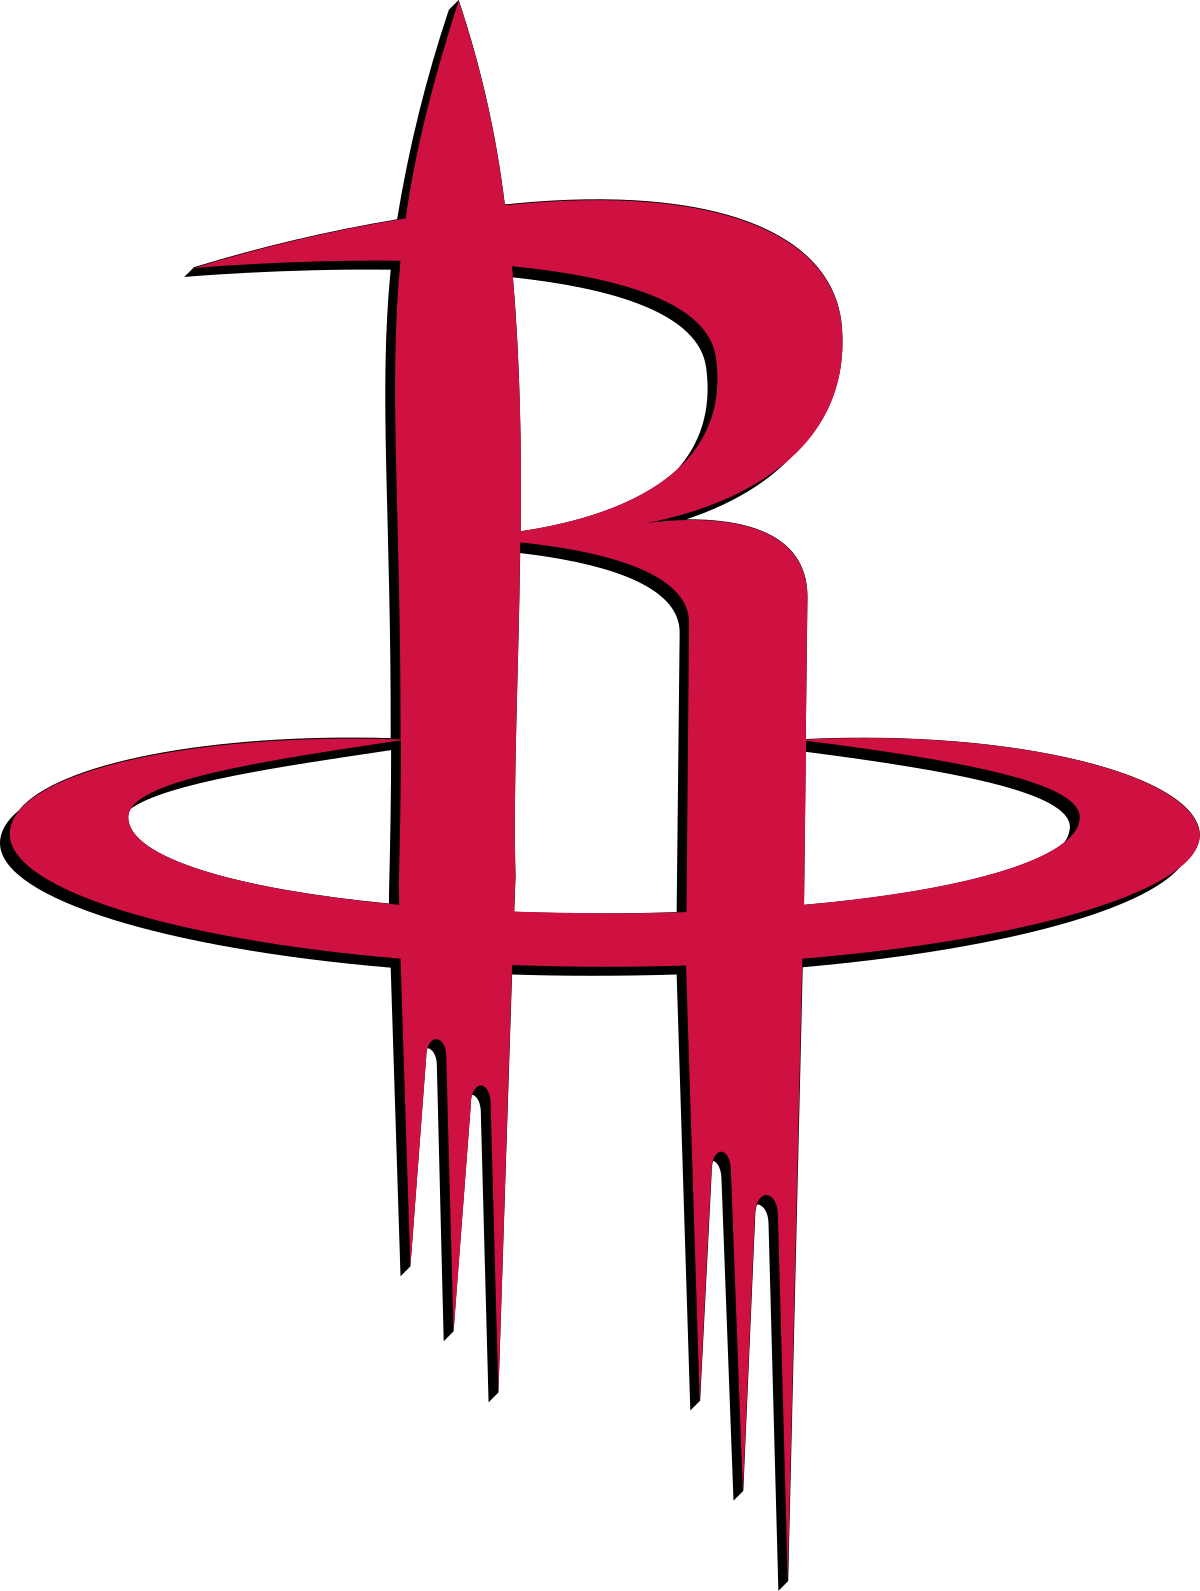 Houston_Rockets.svg